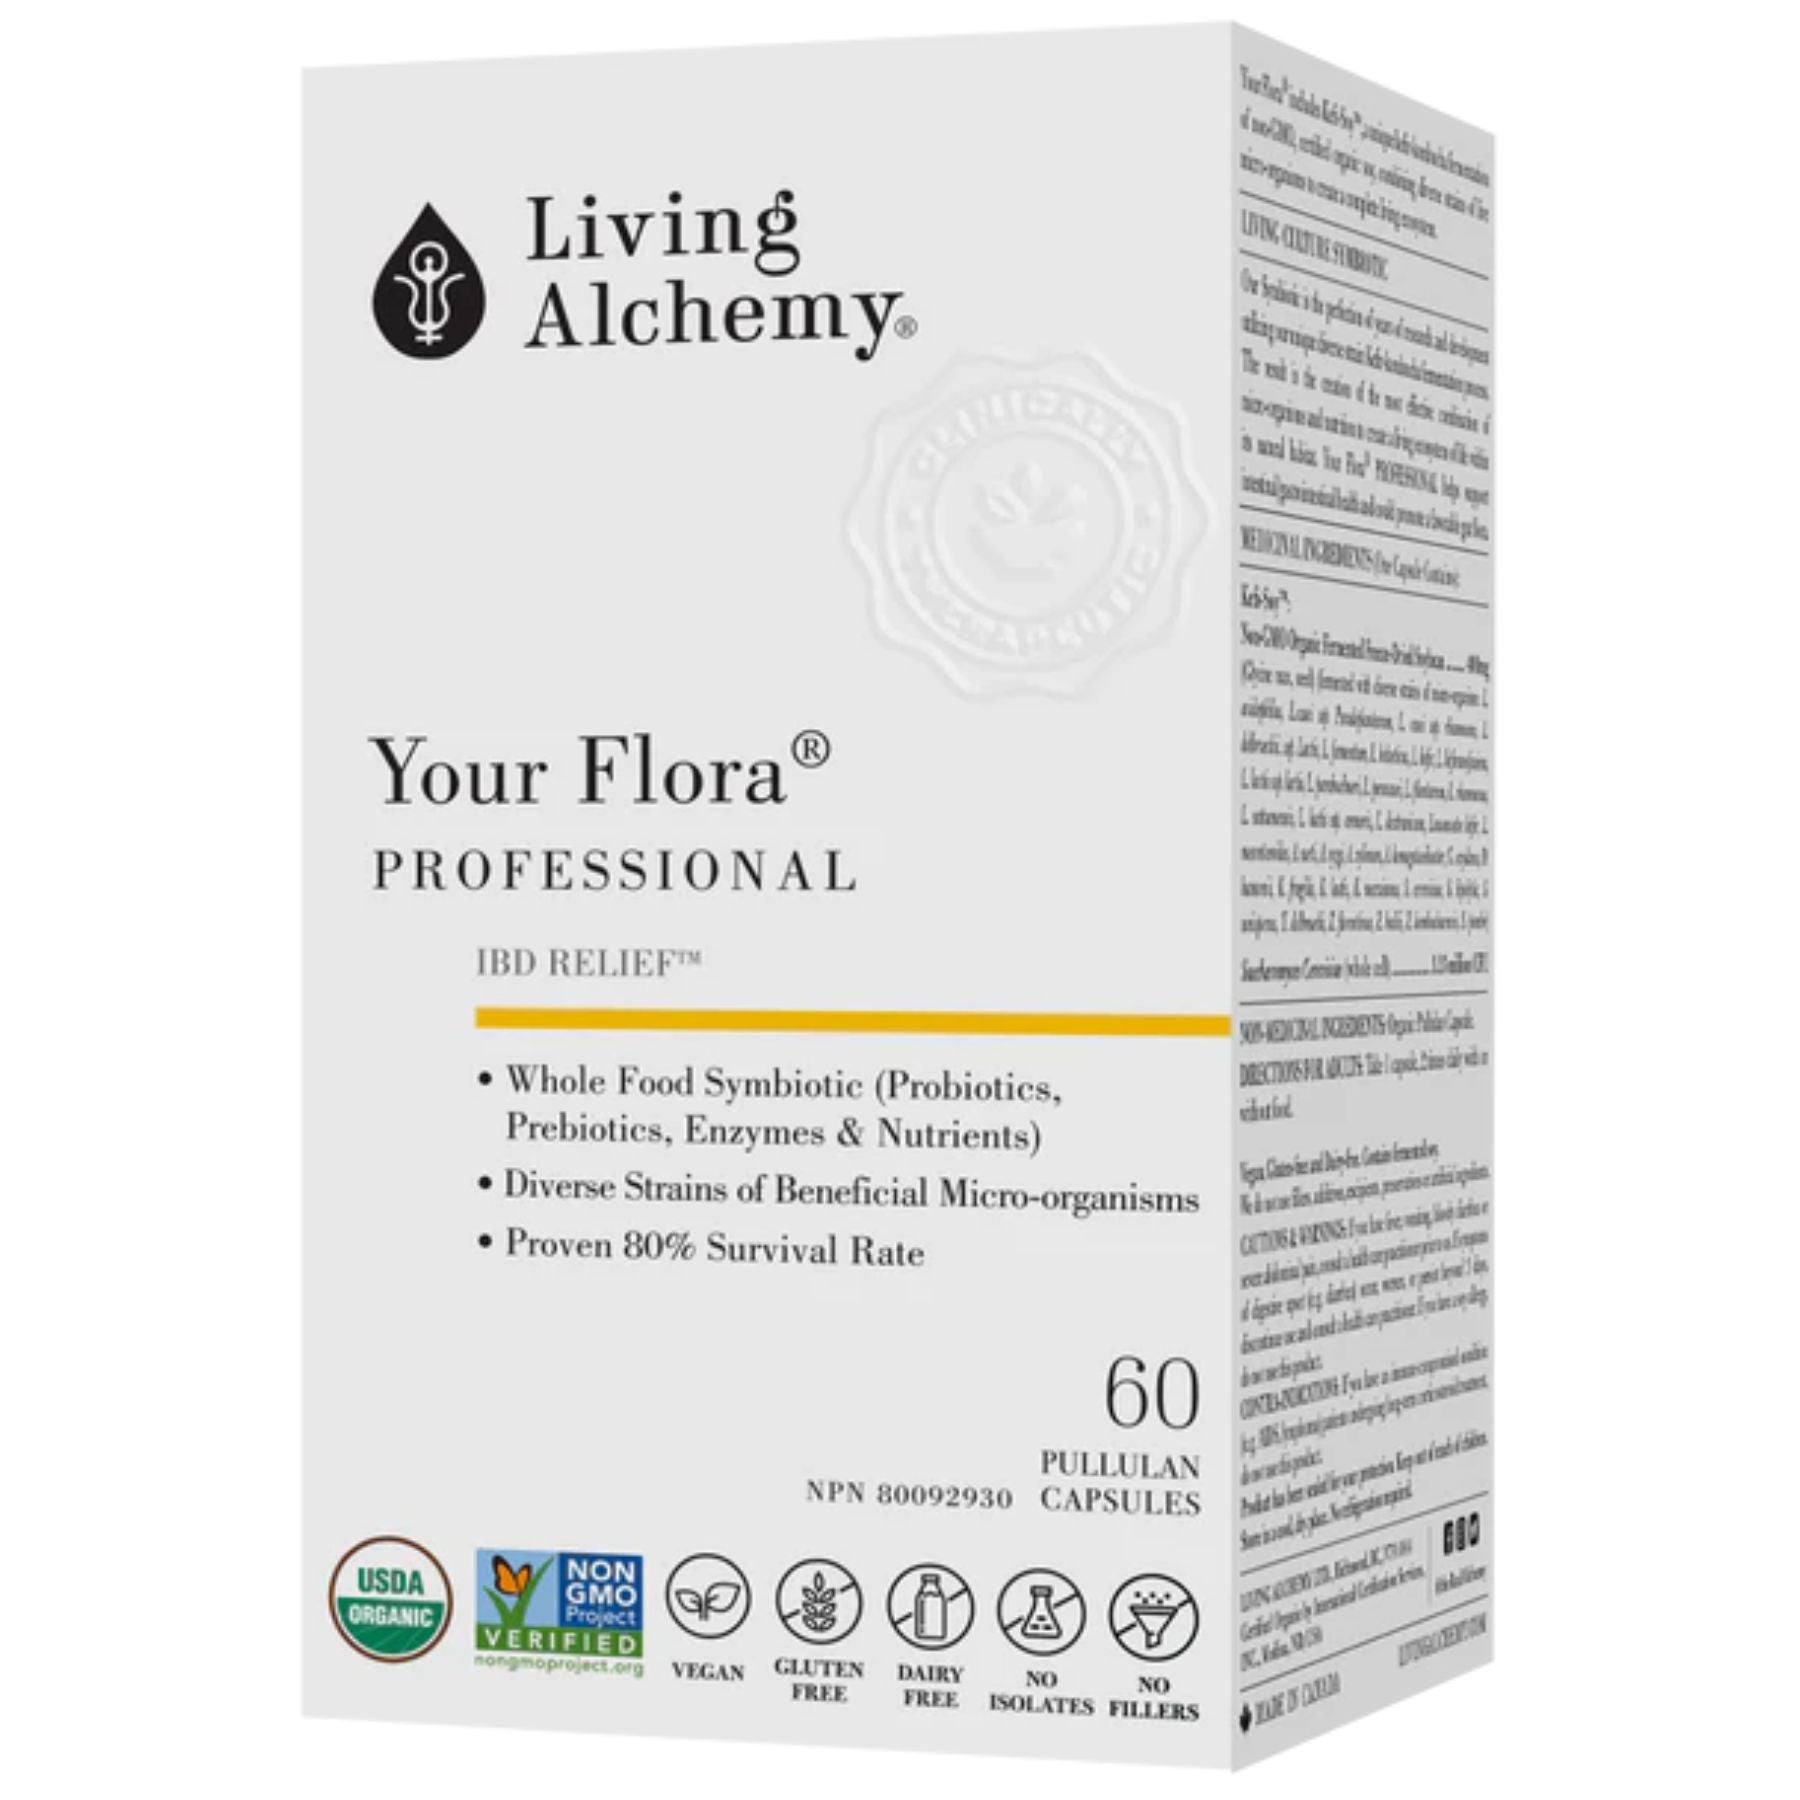 Living Alchemy Your Flora Probiotic Professional 60s